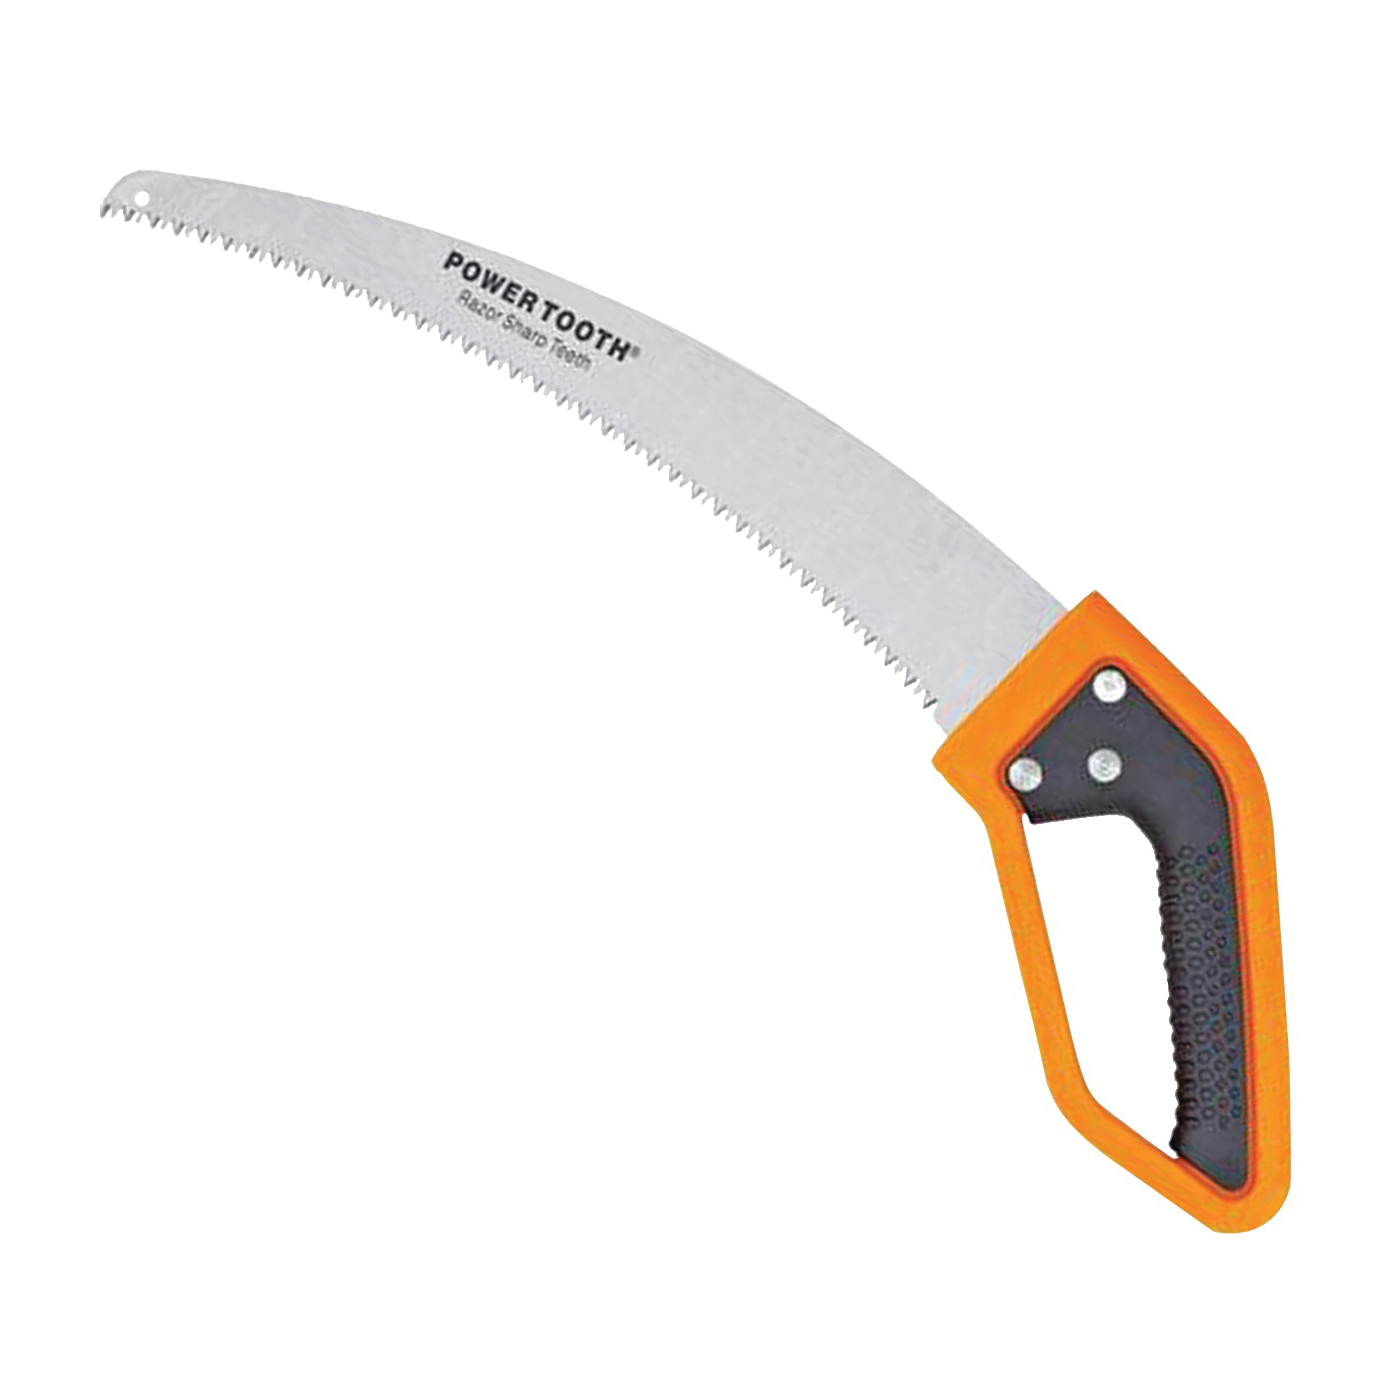 393440-1001 Pruning Saw, Steel Blade, D-Shaped Handle